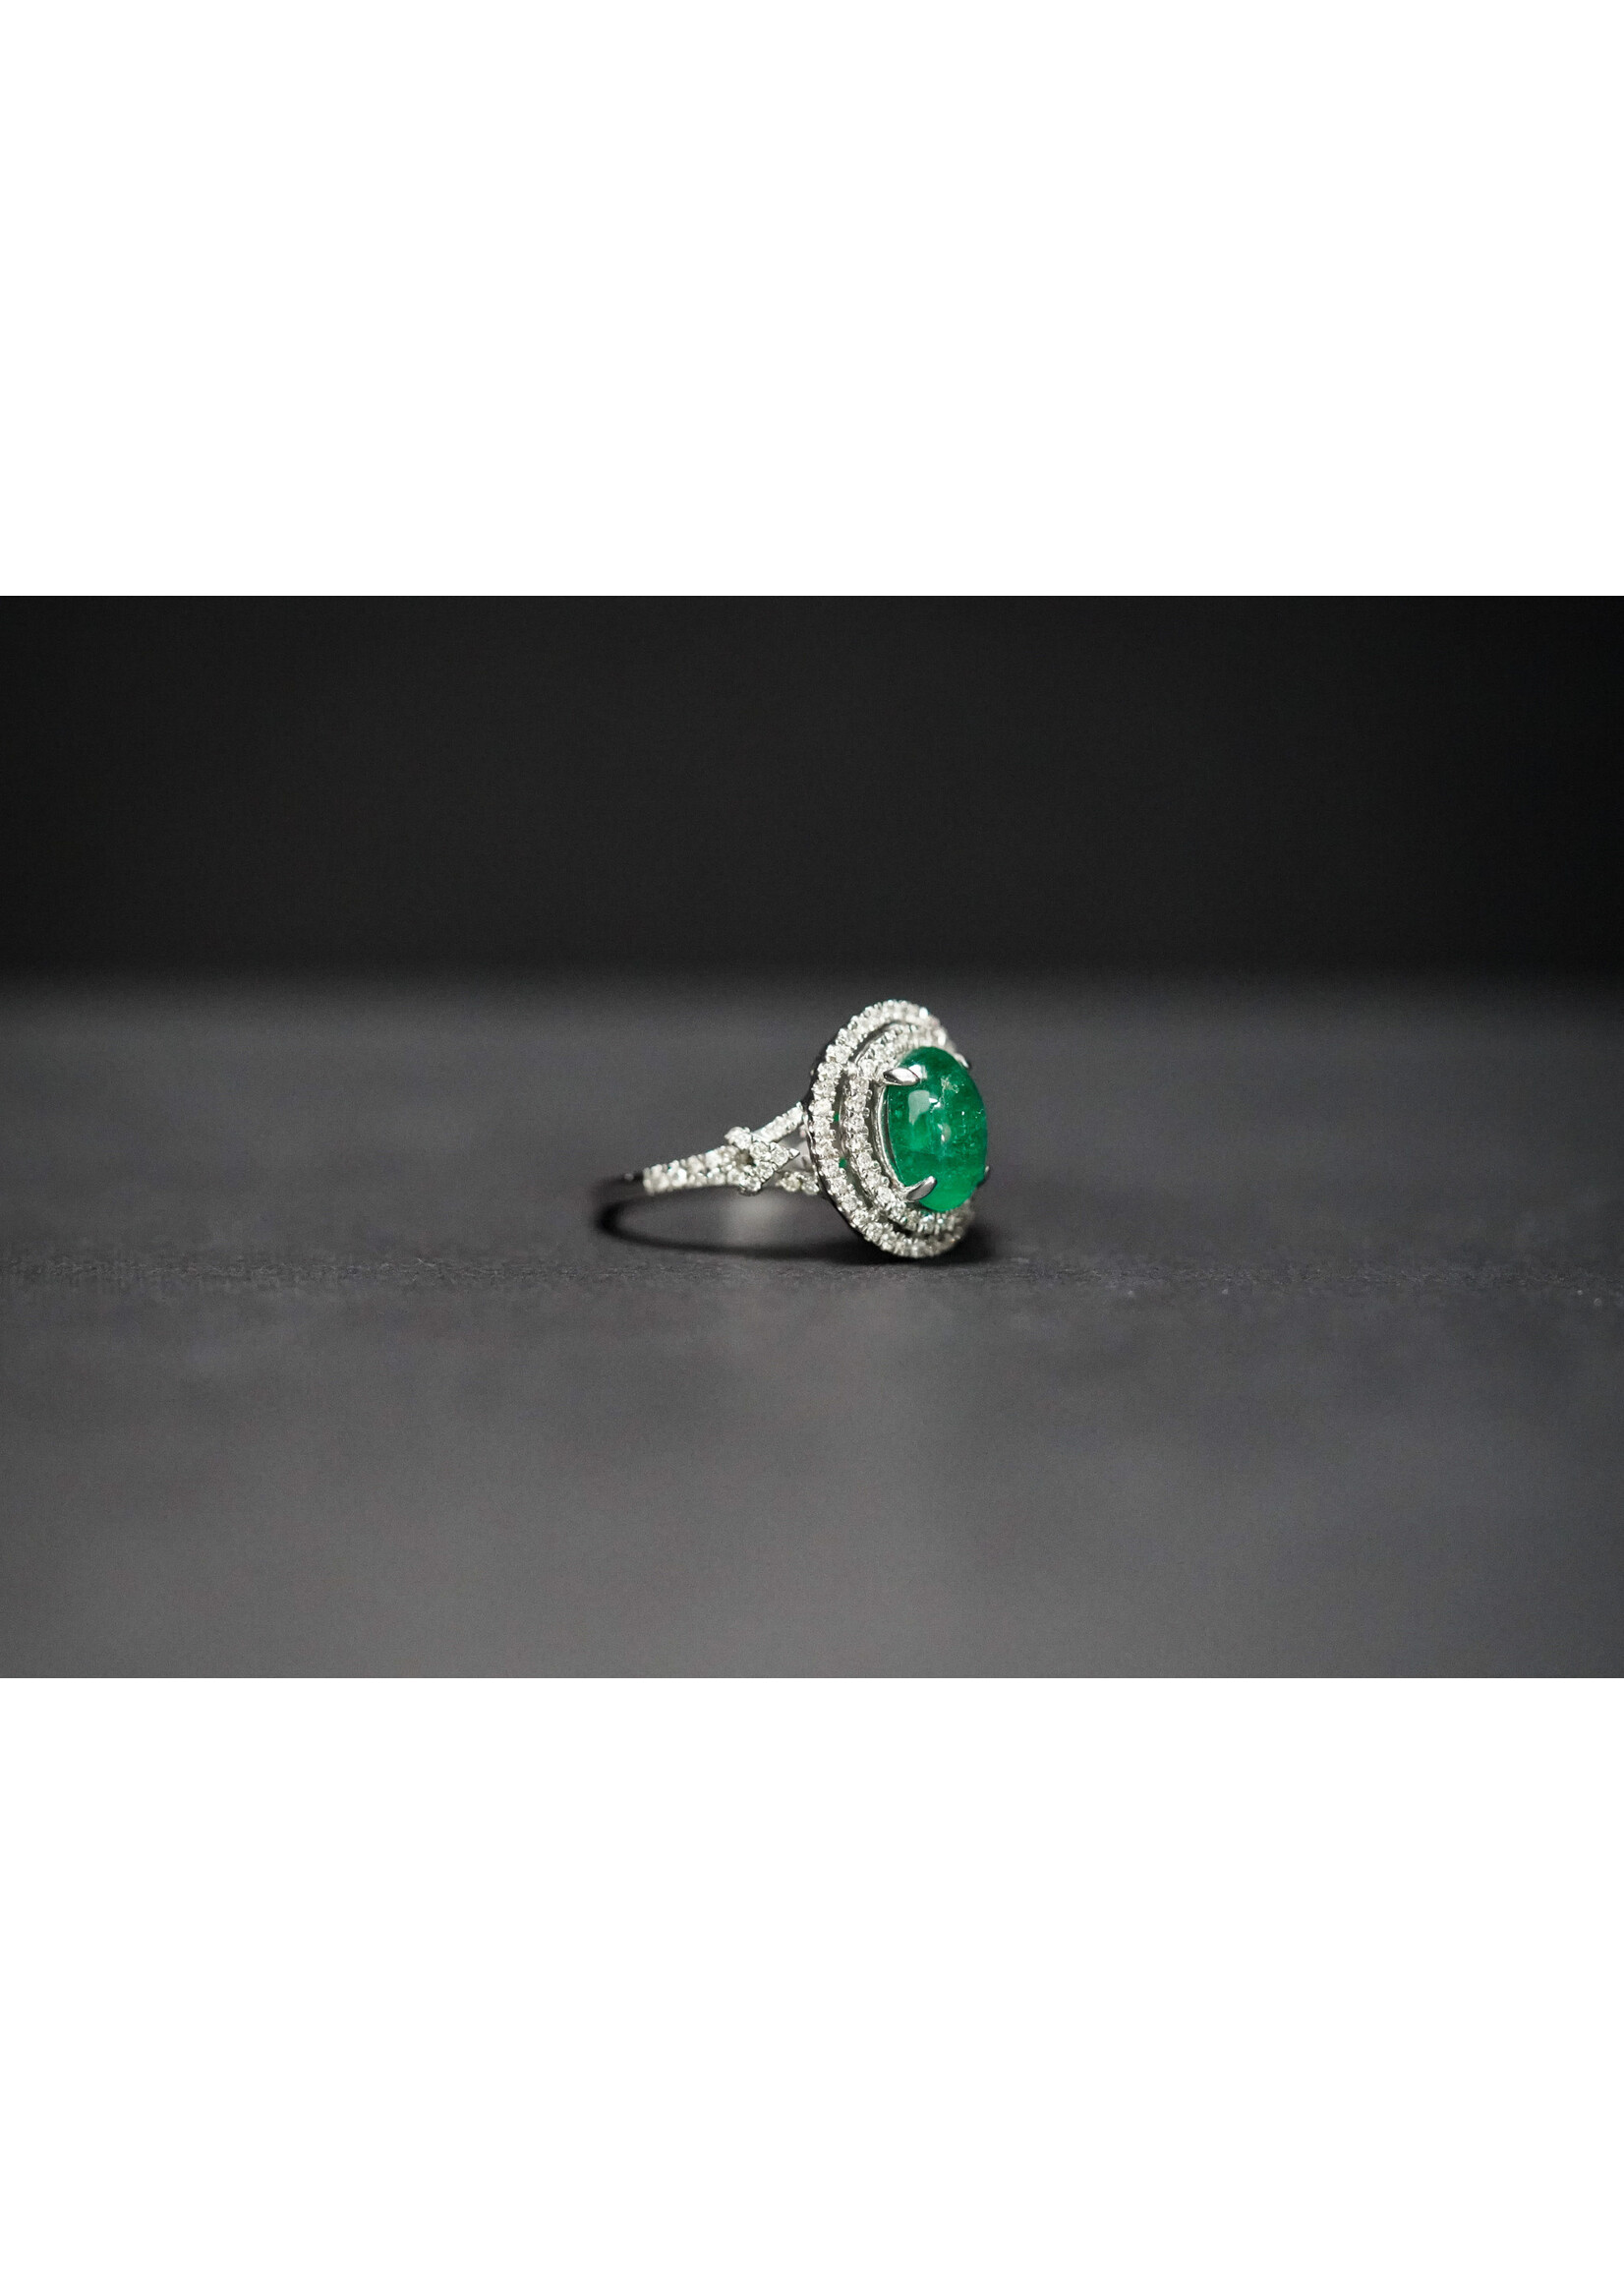 14KW 4.0g 2.42ctw (1.89ctr) Emerald & Diamond Halo Ring (size 7.25)